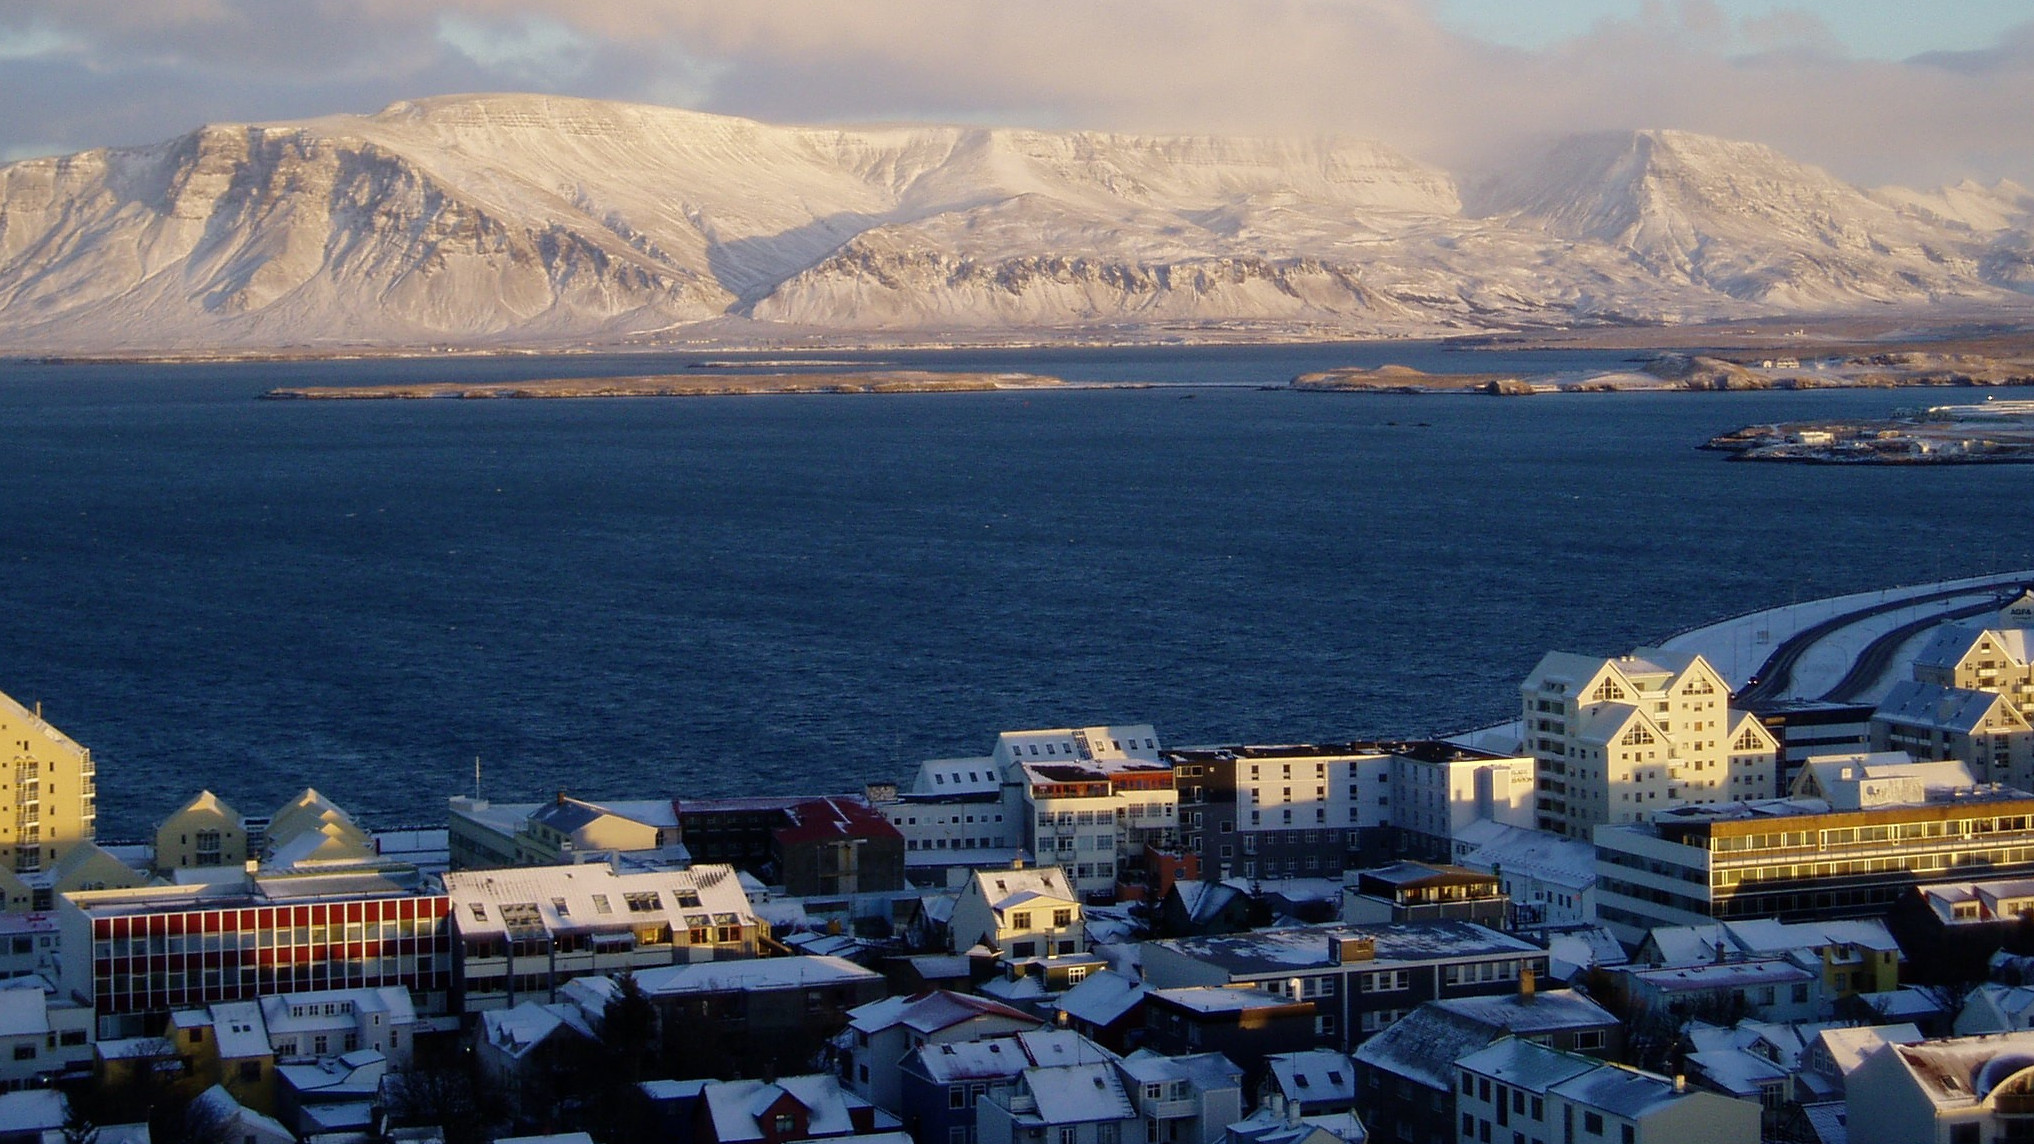 Reykjavik (photo from Wikimedia Commons)